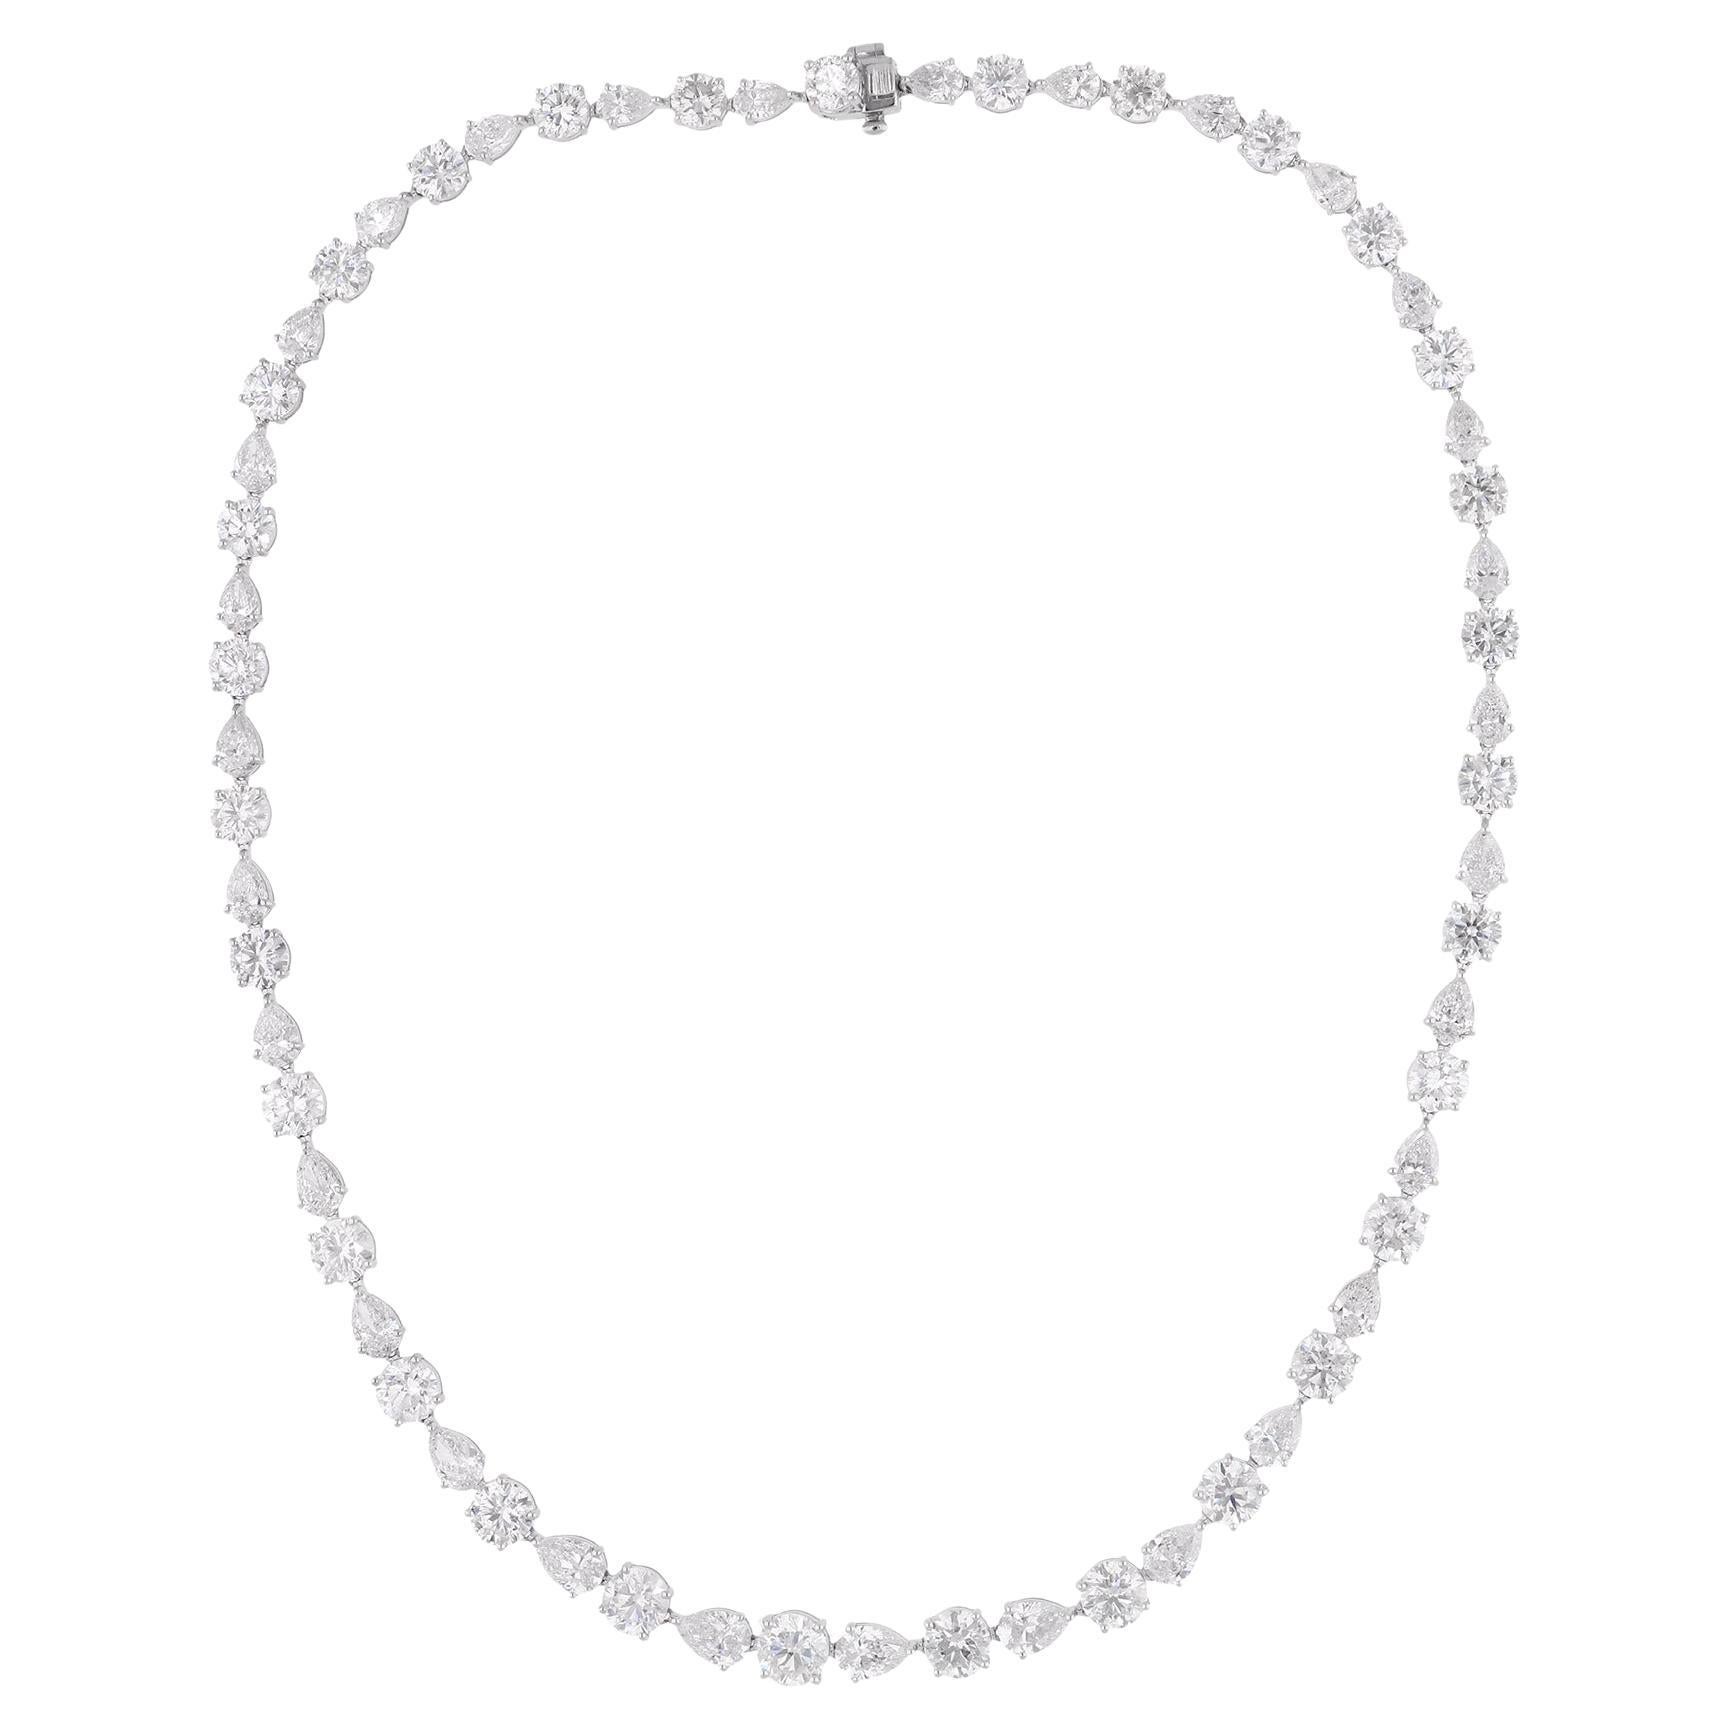 29.08 Carat Round Pear Shape Diamond Necklace Solid 14 Karat White Gold Jewelry